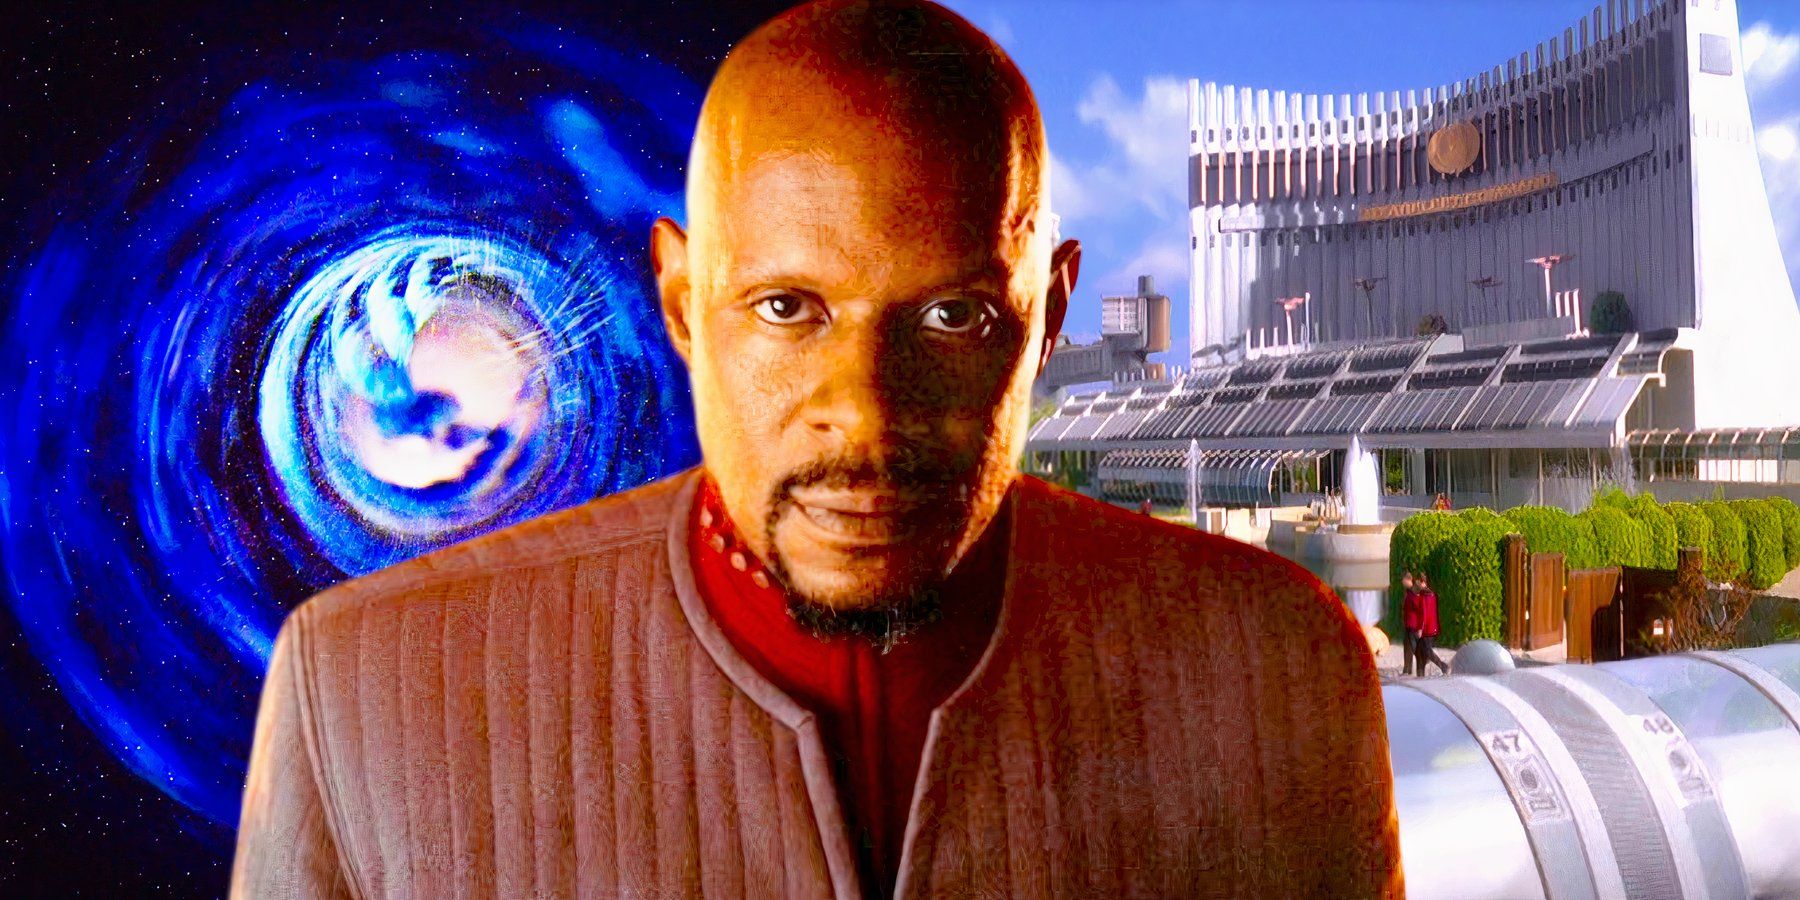 An image of Captain Sisko standing between the wormhole and Starfleet Headquarters